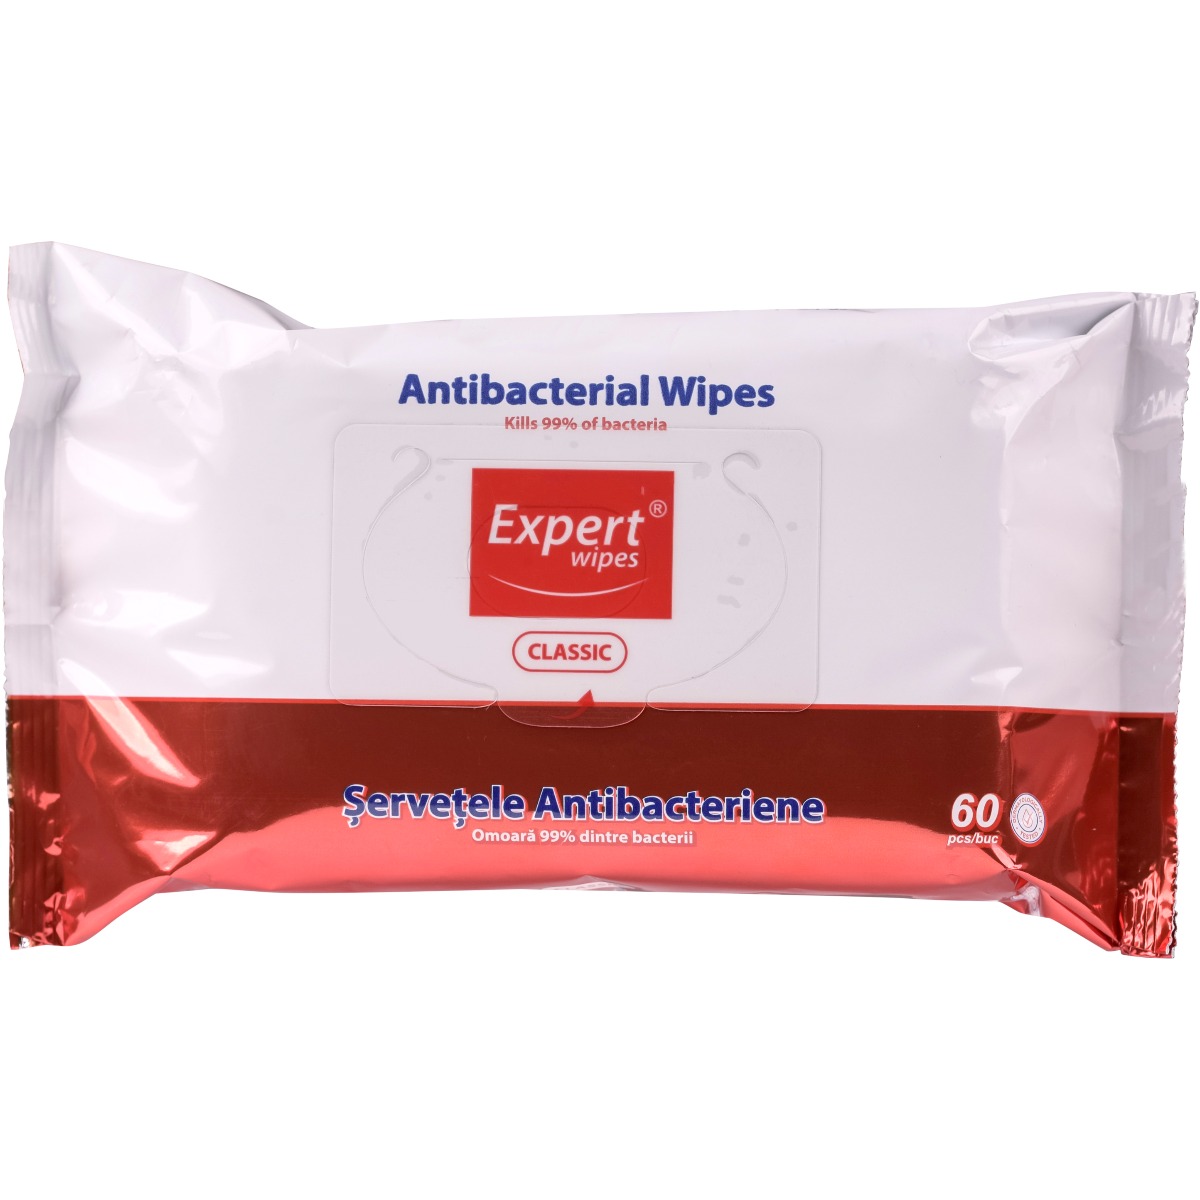 Servetele antibacteriene Expert Wipes Clasic, 60 buc Expert Wipes